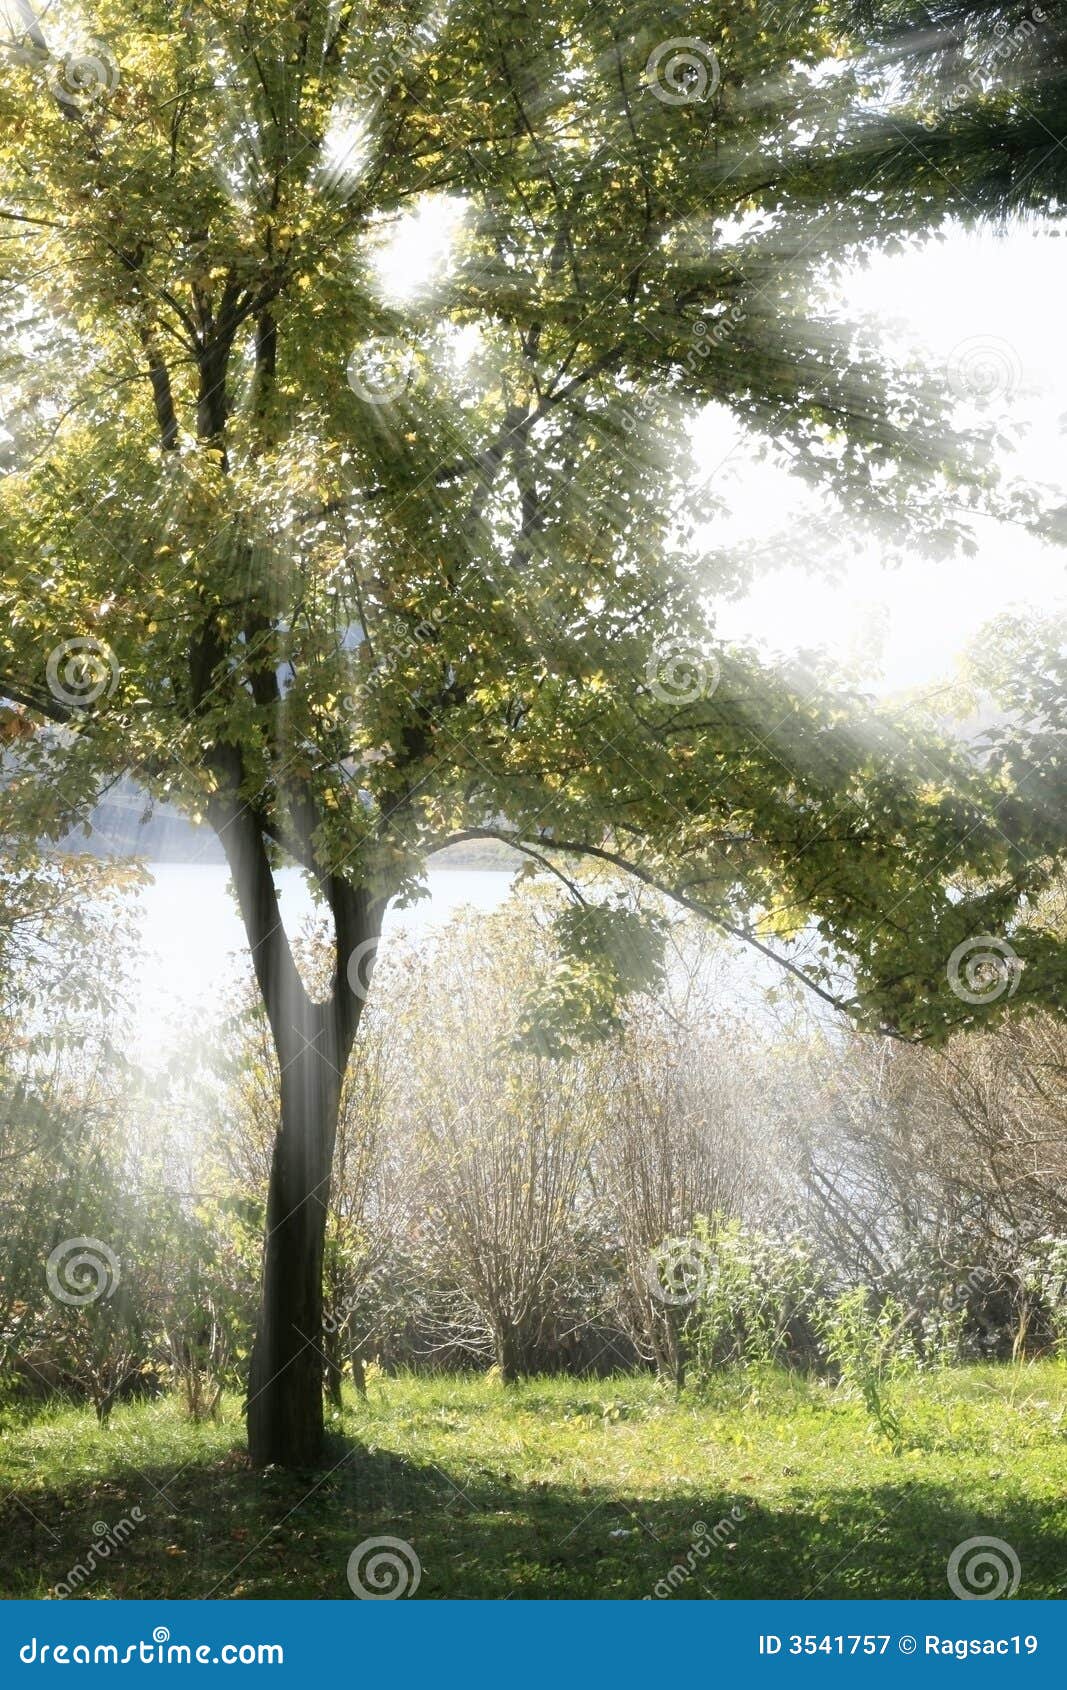 sunbeam through a tree